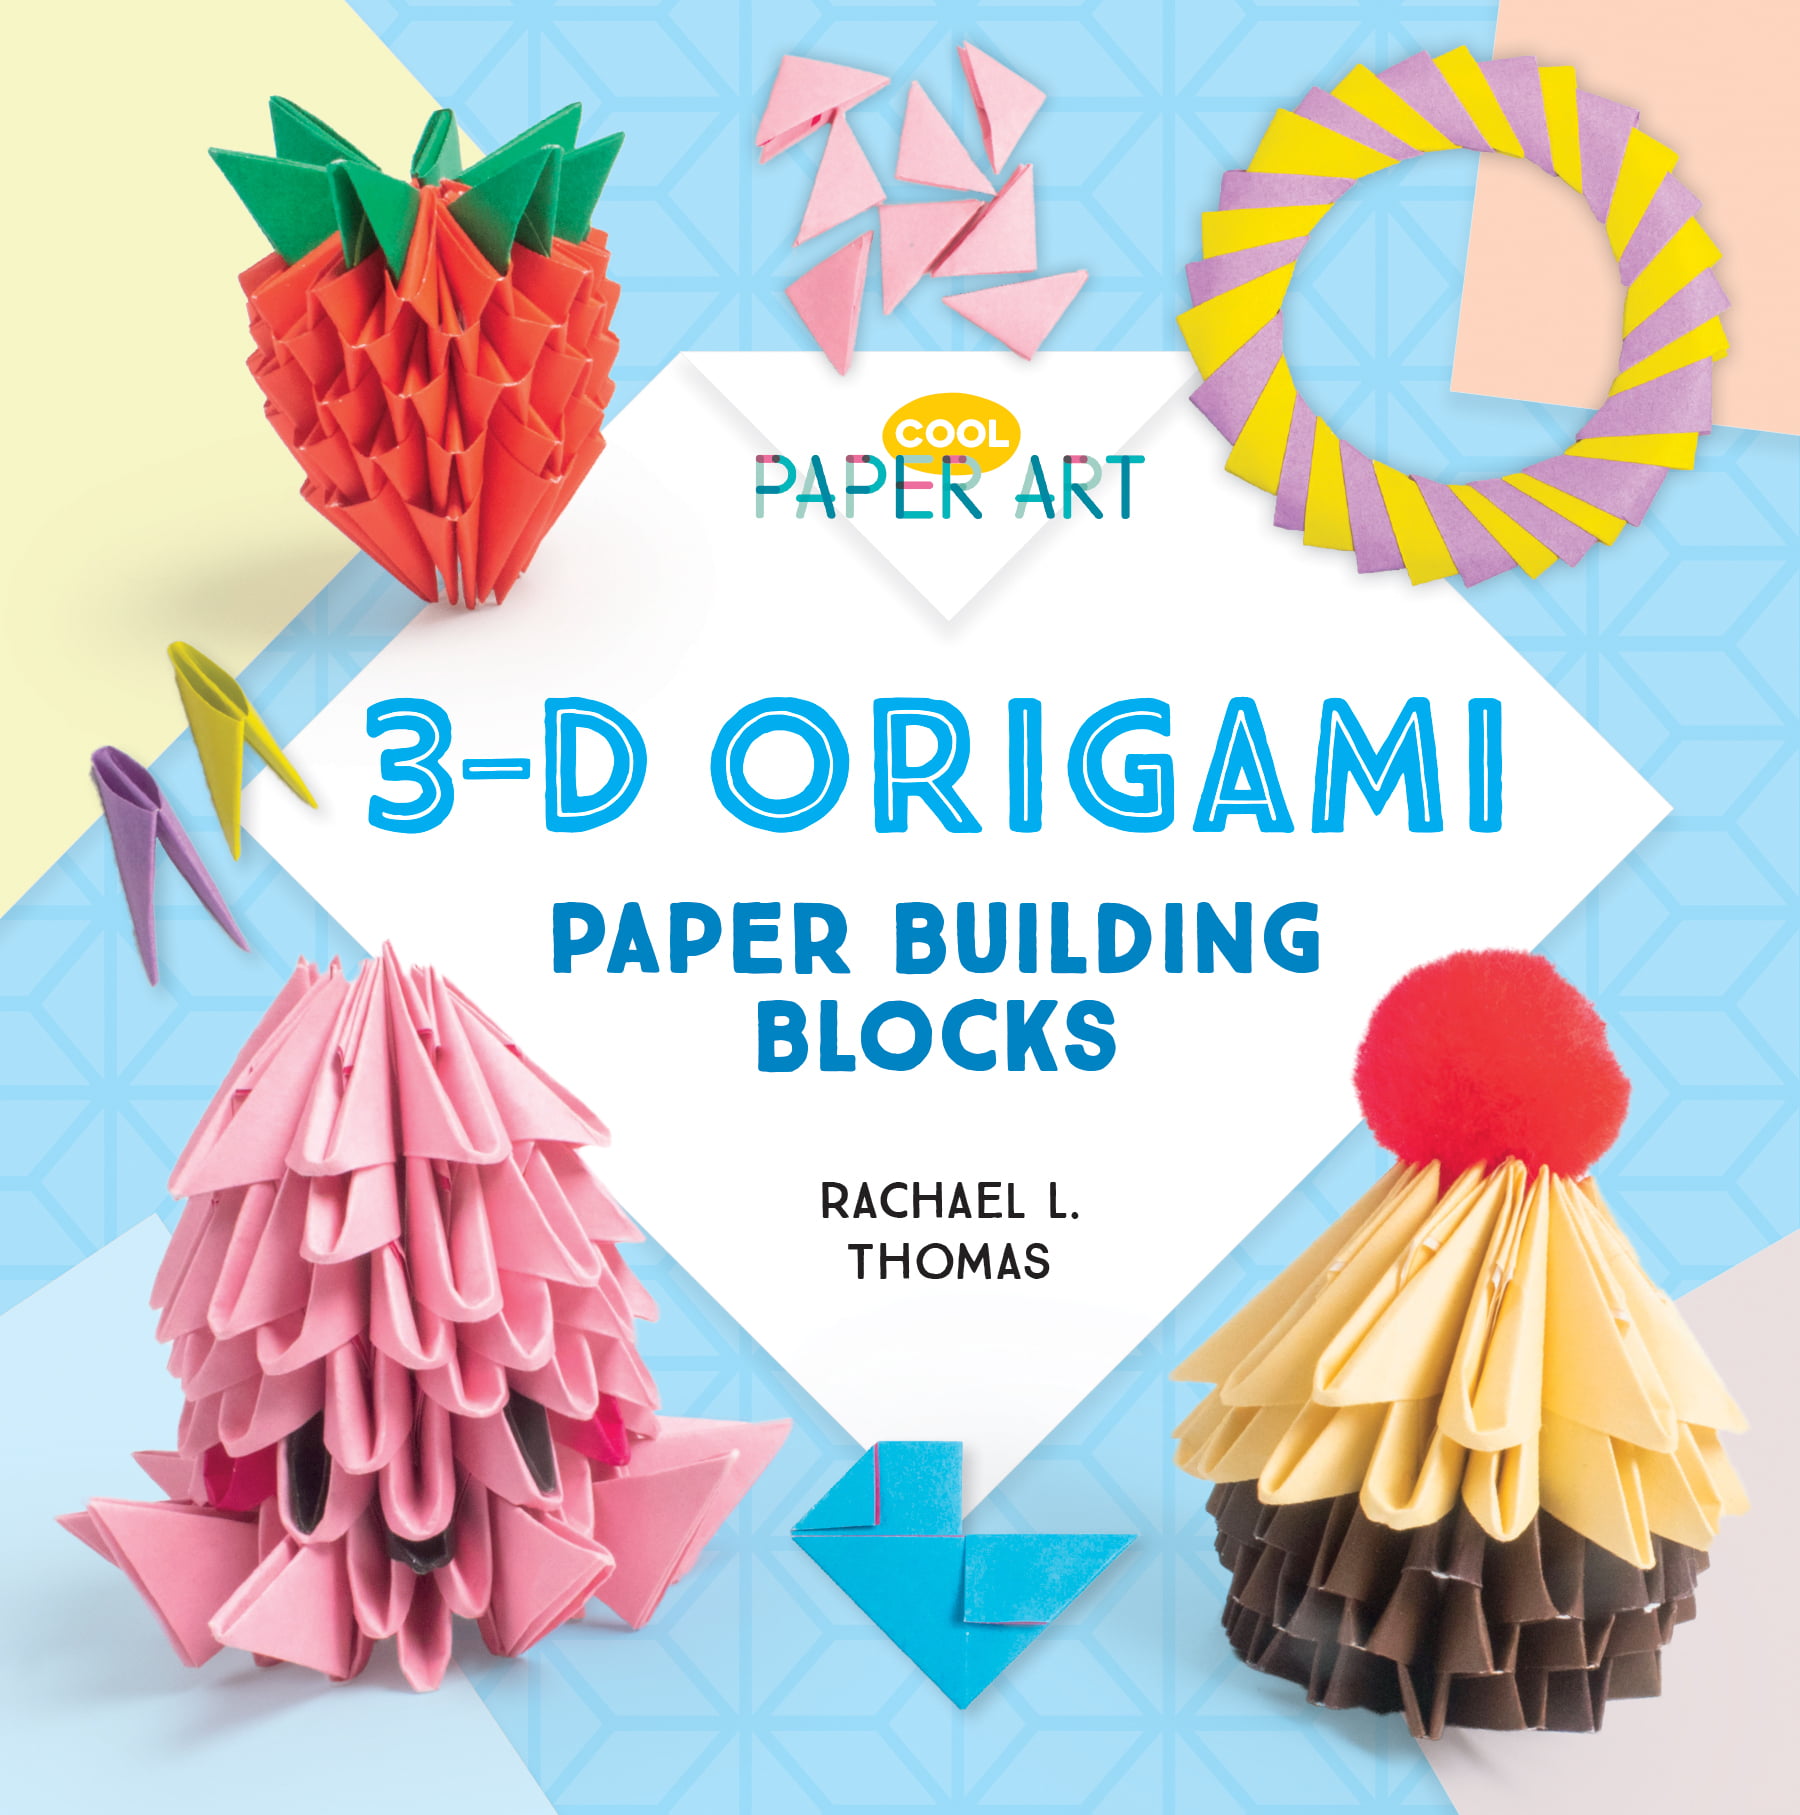 Cool Paper Art 3D Origami Paper Building Blocks (Hardcover